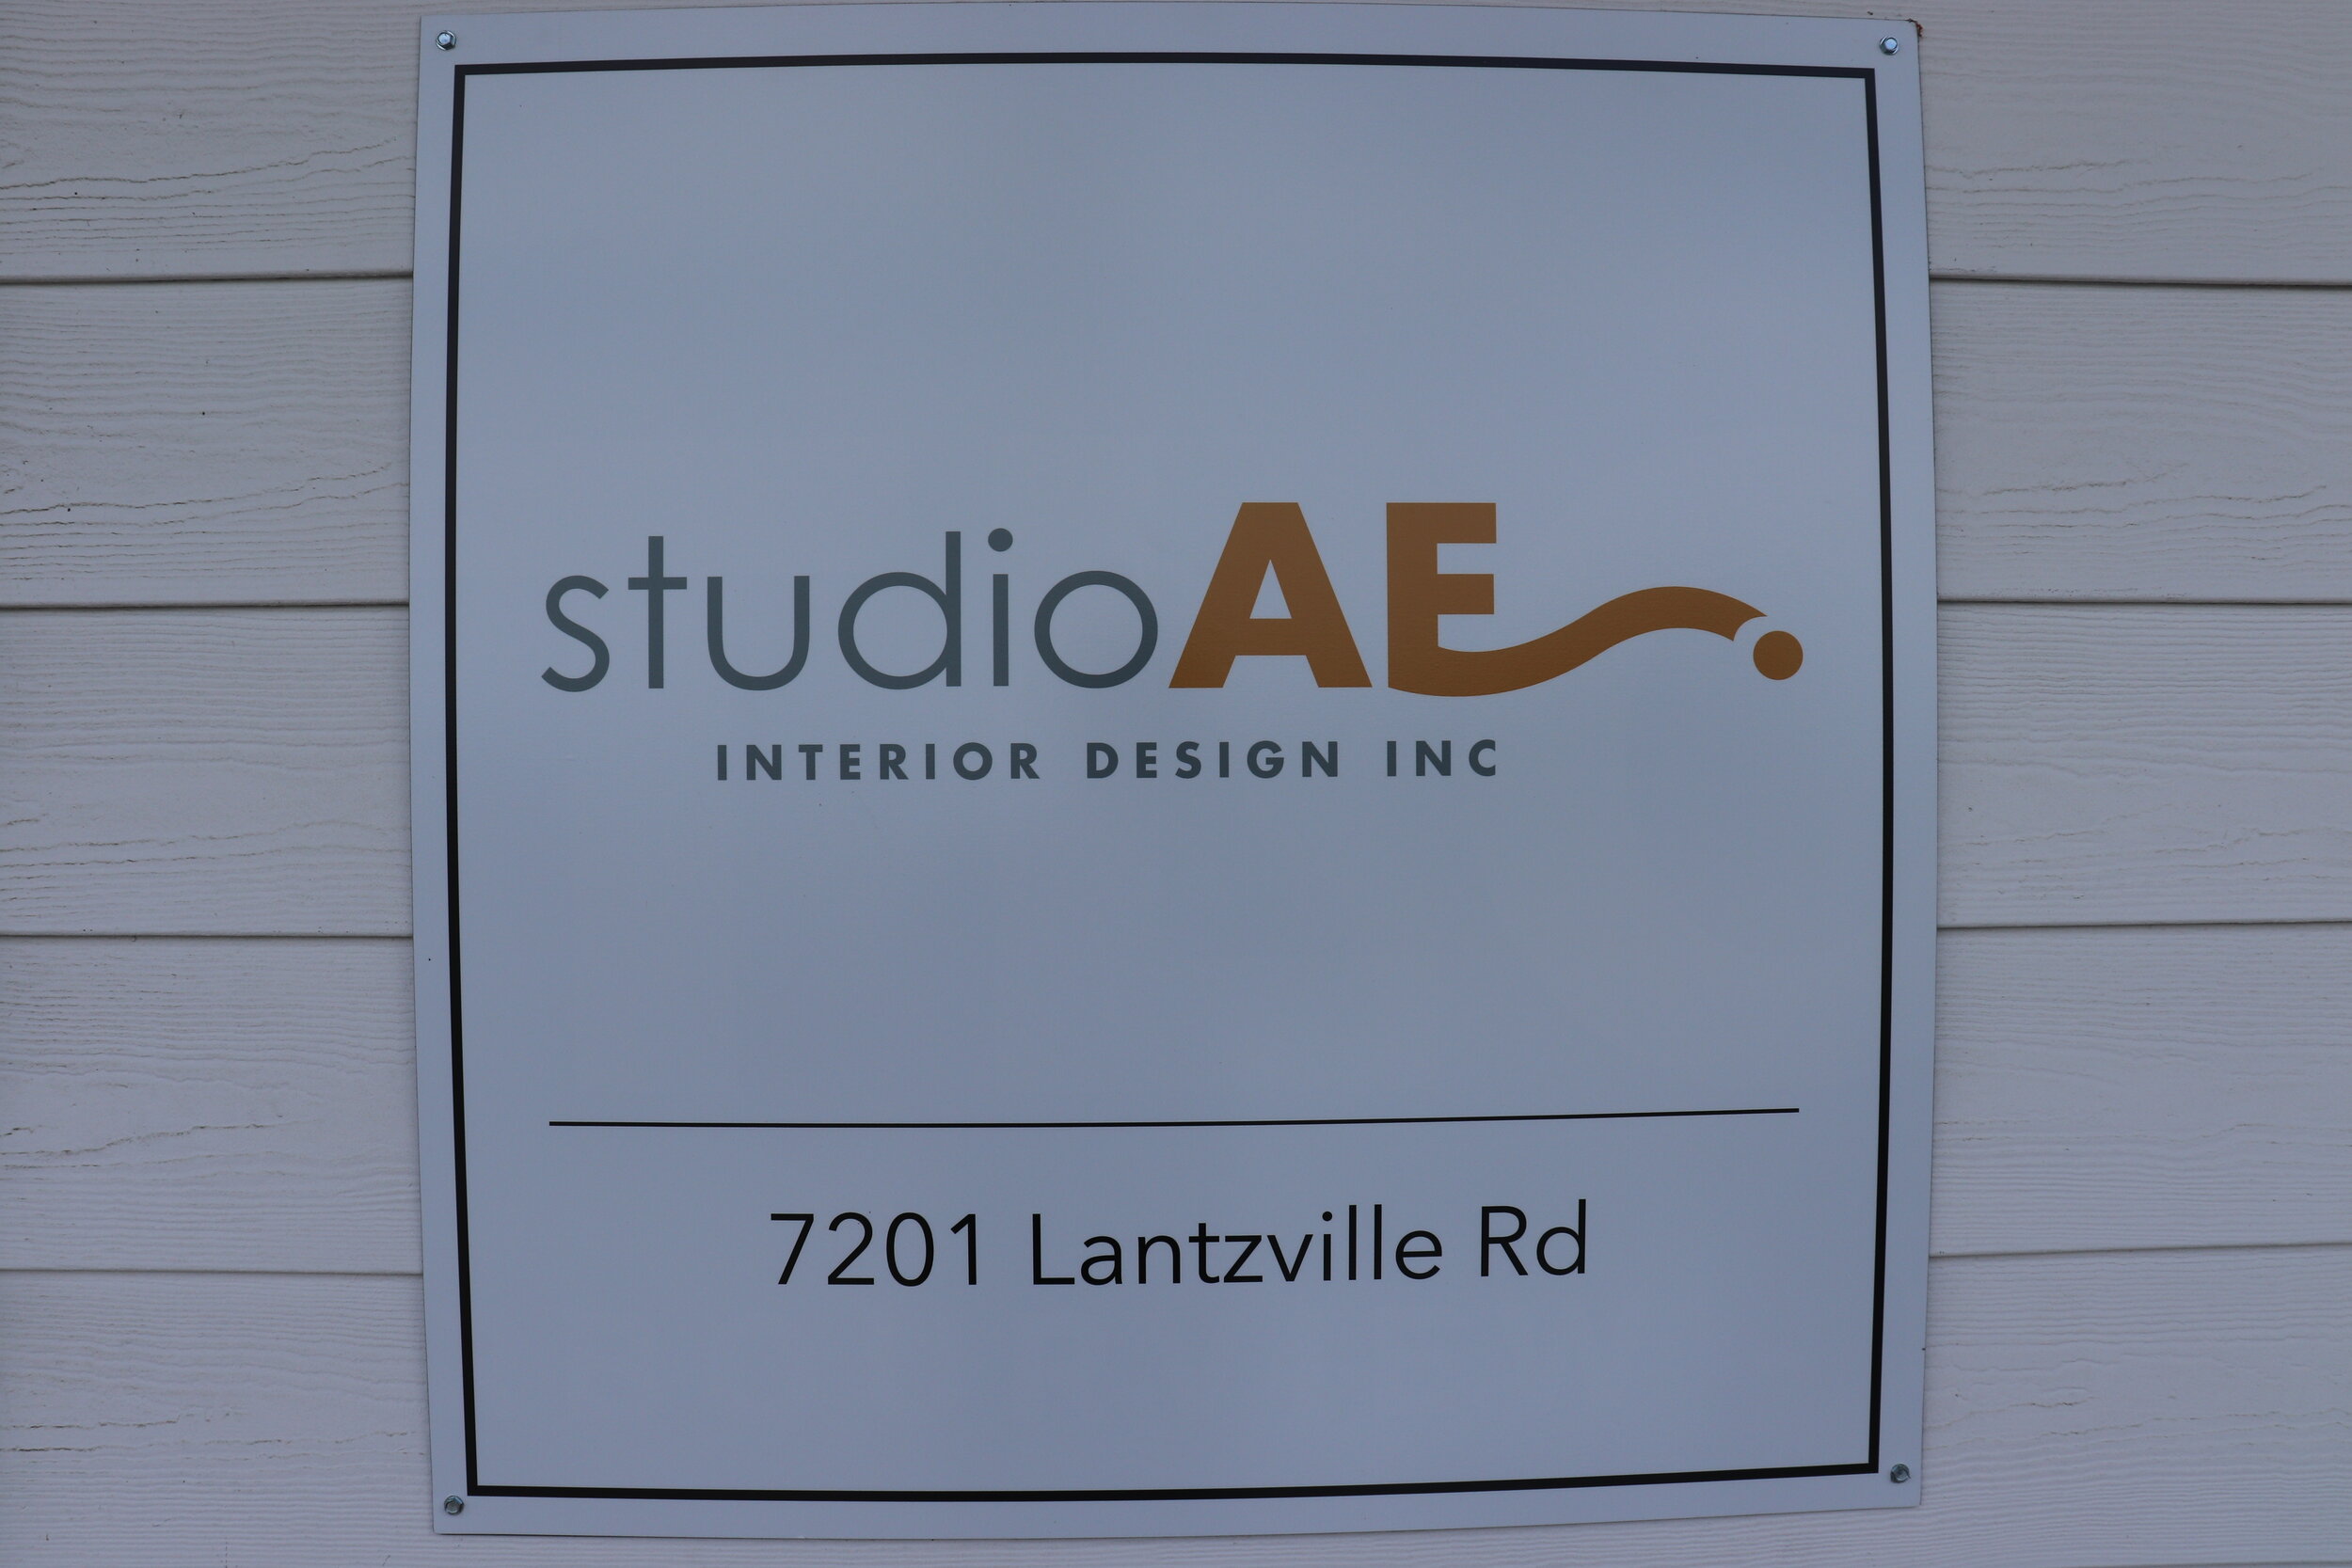 Click image to go to Studio AE Interior Design